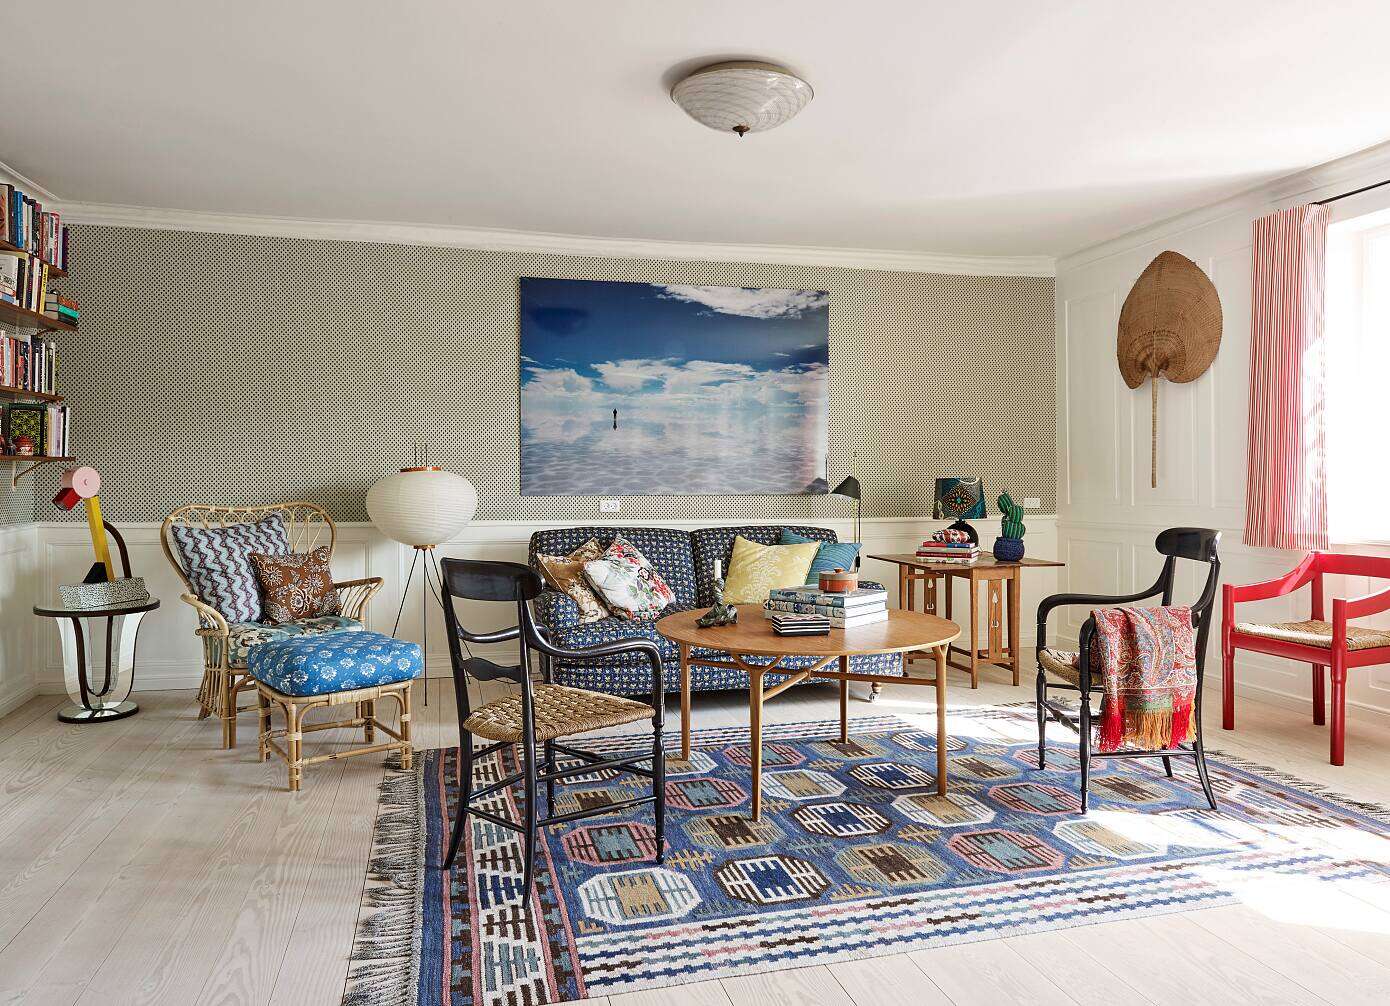 Apartment in Copenhagen by Tina Seidenfaden Busck | HomeAdore